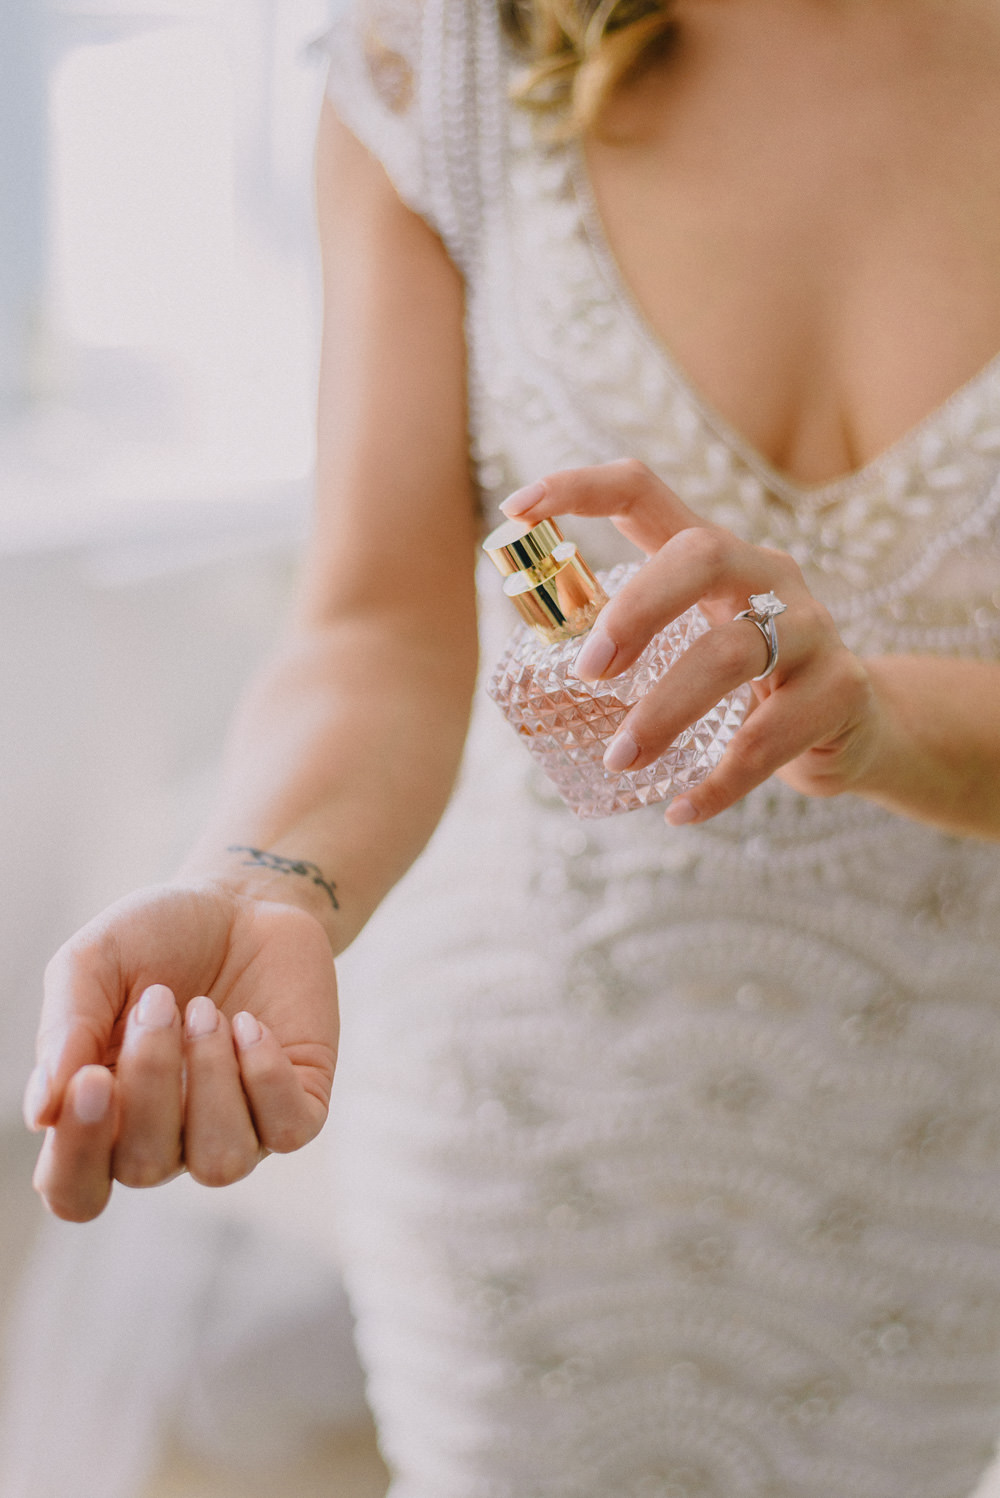 Santorini Small Intimate Wedding Bridal Photography